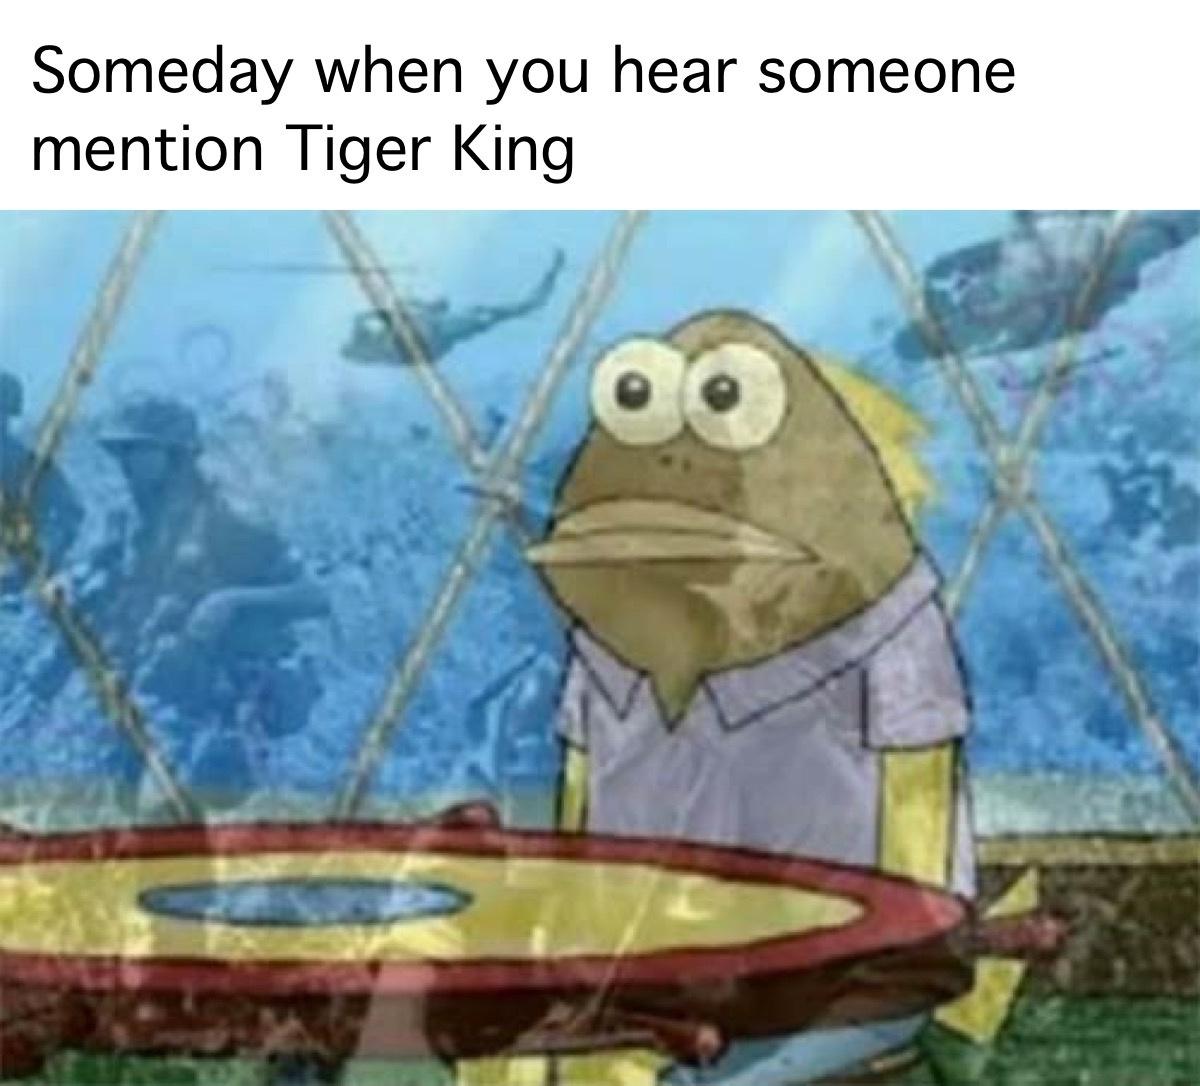 vietnam flashbacks meme template - Someday when you hear someone mention Tiger King